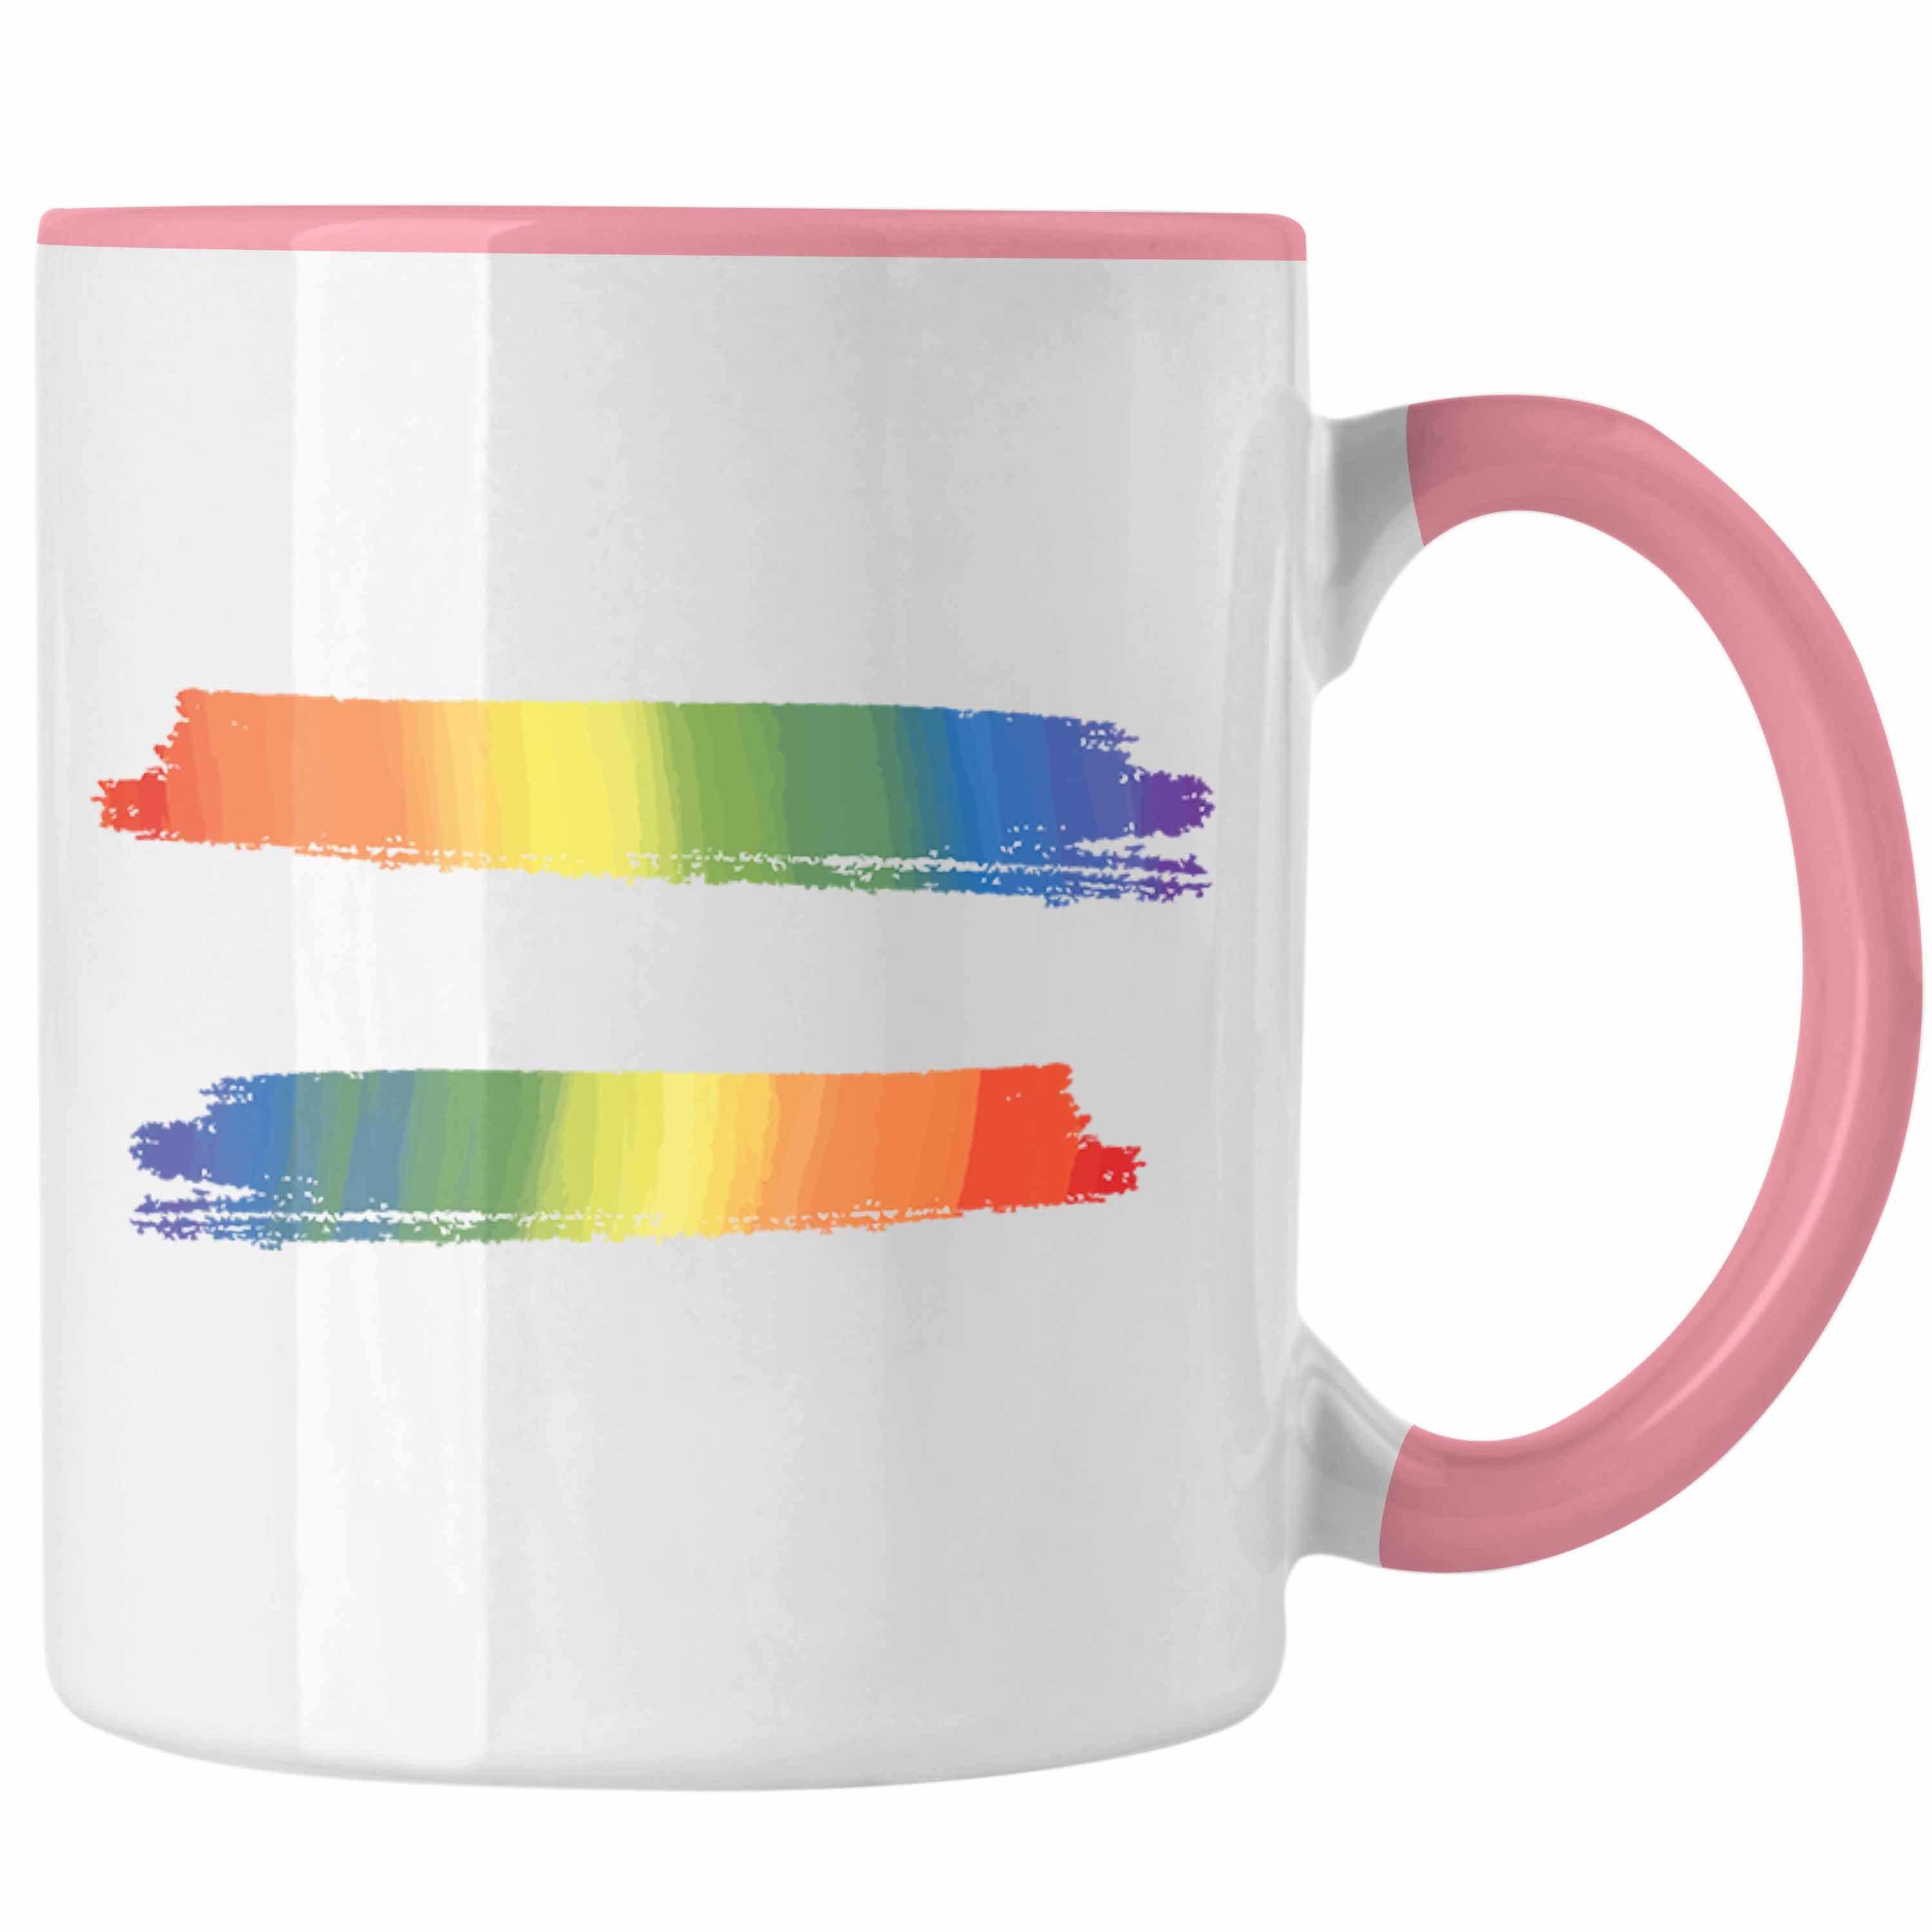 Trendation Tasse Trendation - Regenbogen Tasse Geschenk LGBT Schwule Lesben Transgender Grafik Pride Rosa